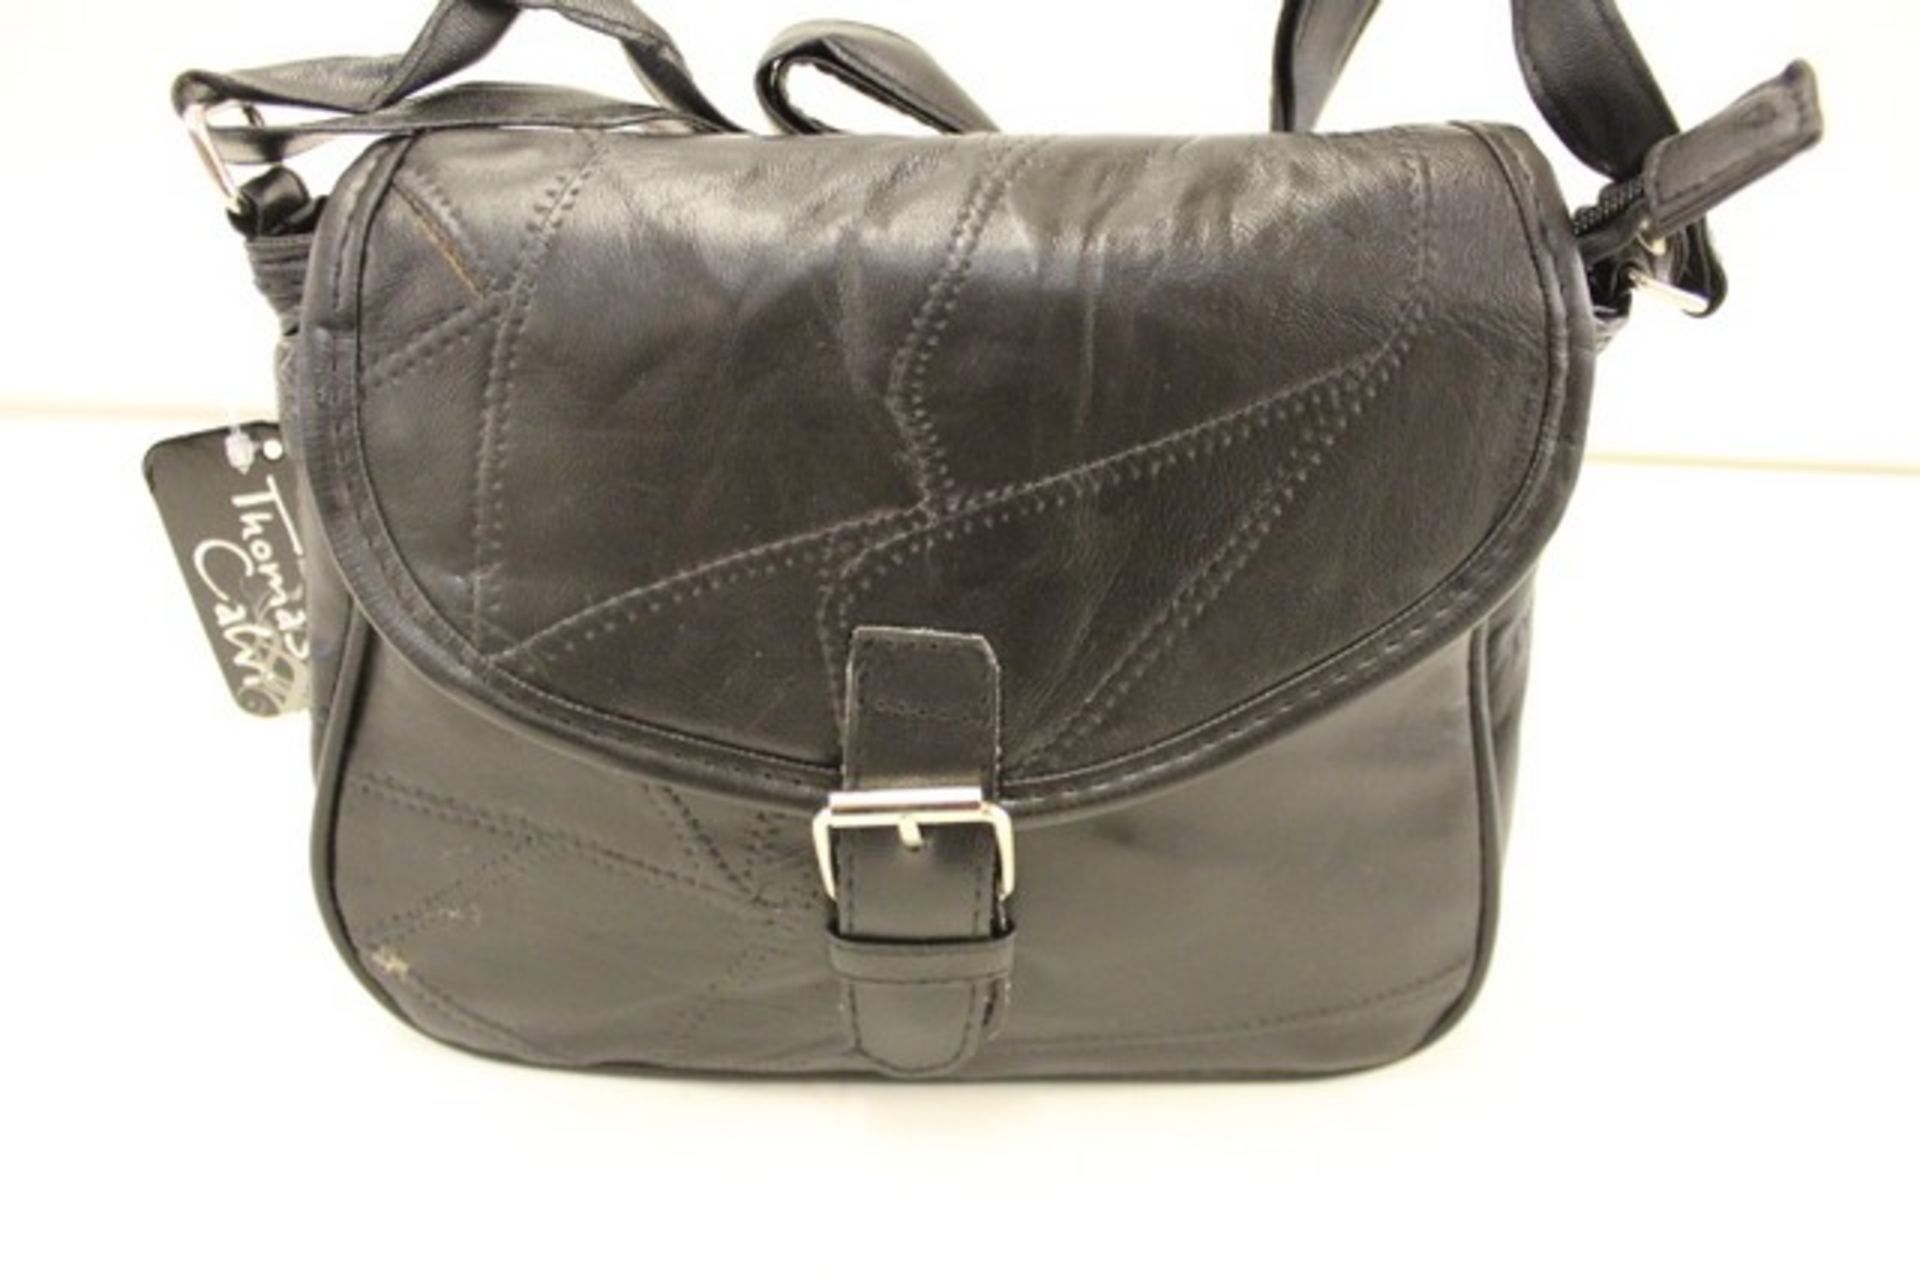 V Brand New Black Patchwork Style Handbag - (approx size 7" x 9.5")